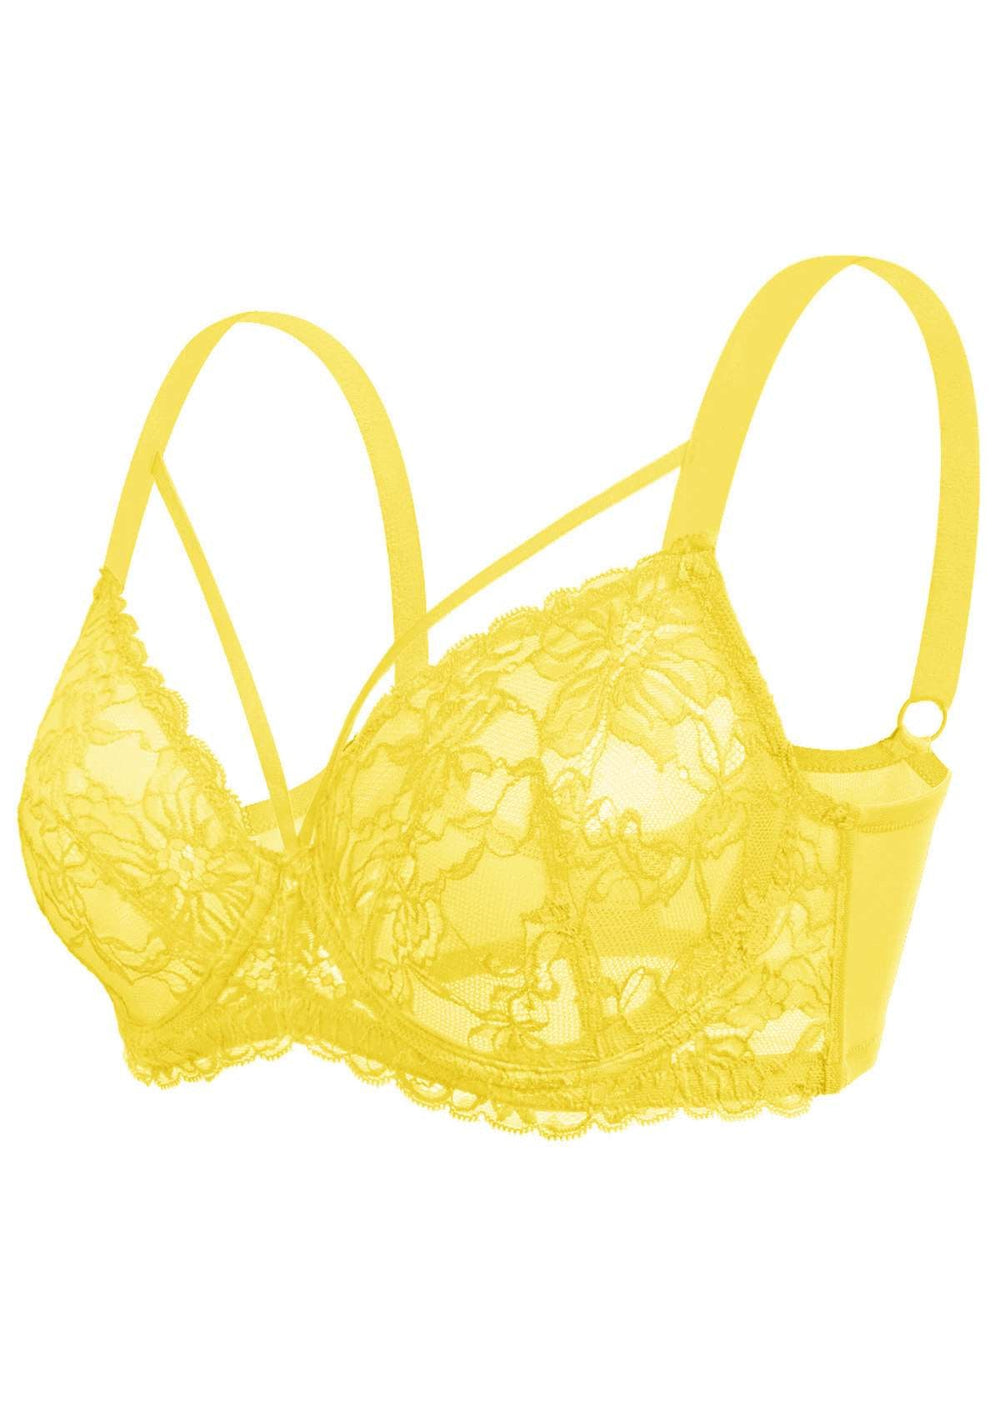 Golden Ochre Yellow Lace Bralette, yellow bra, sheer bralette, gift for  her, lingerie, see through lingerie, Brighton Lace